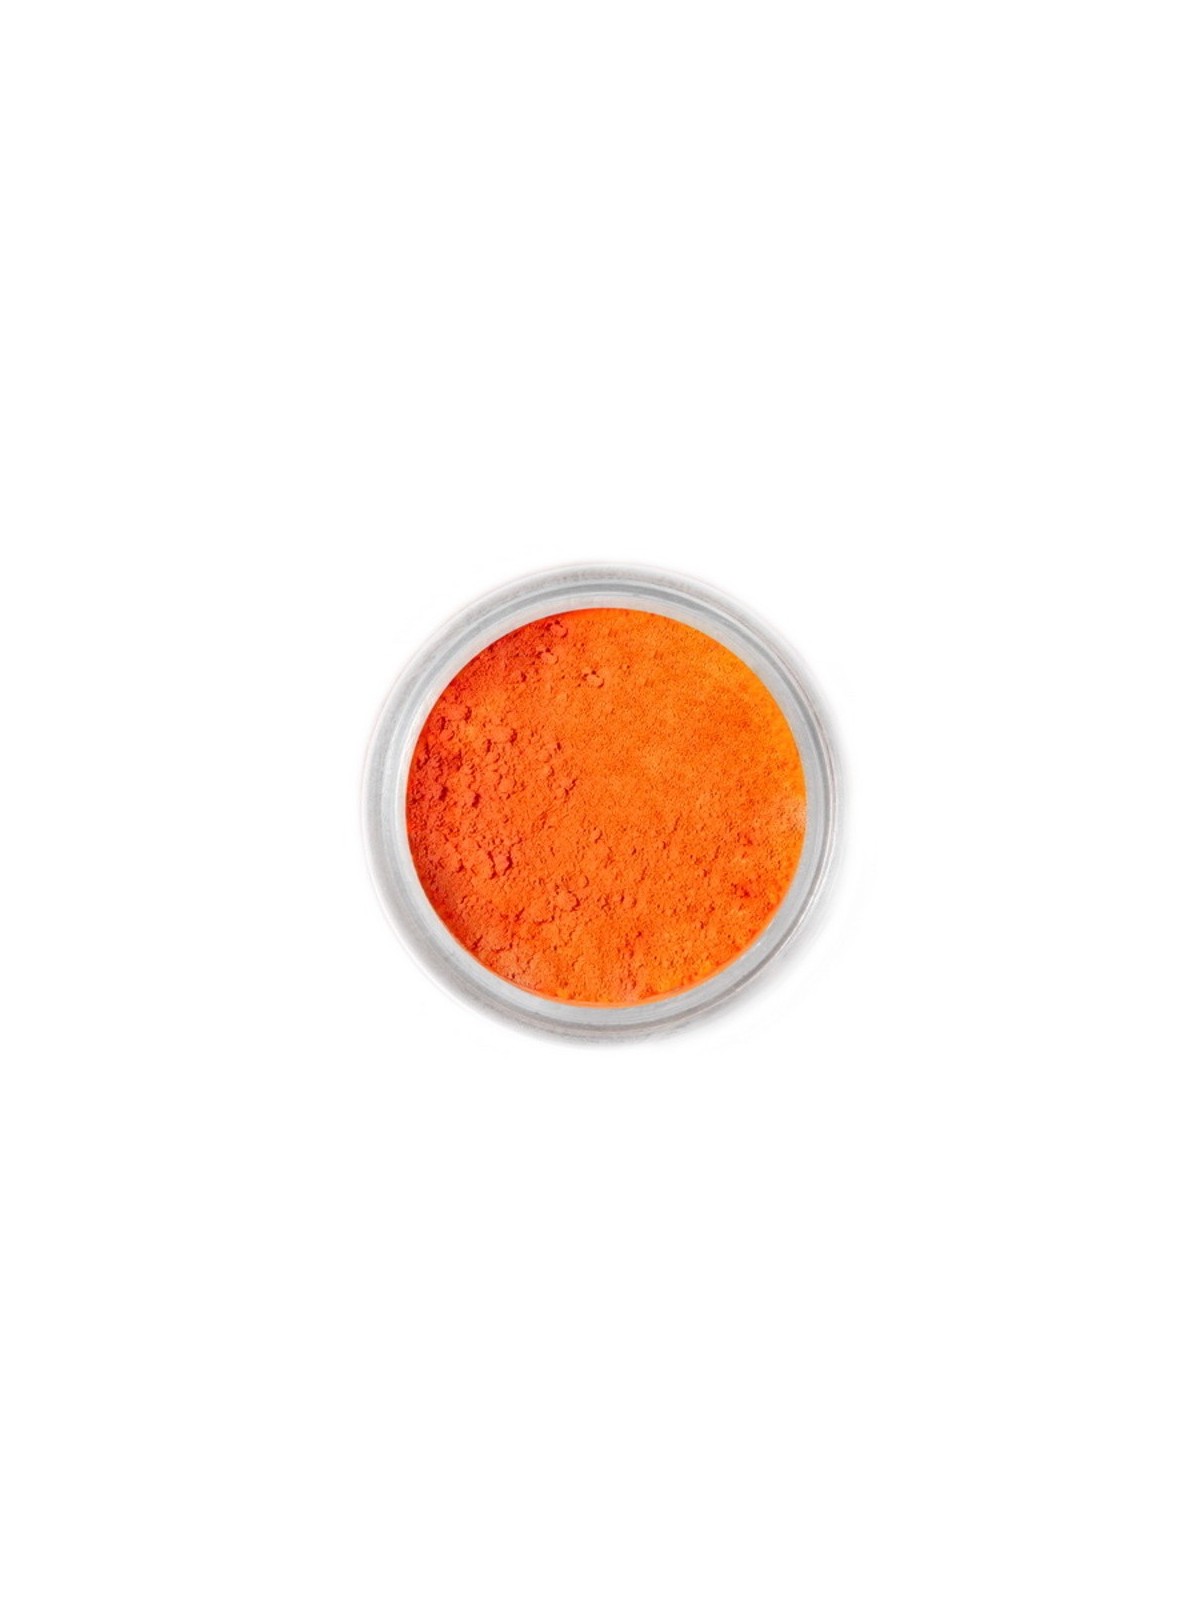 Jadalna farba proszkowa Fractal - Orange, Orange (2,5 g)